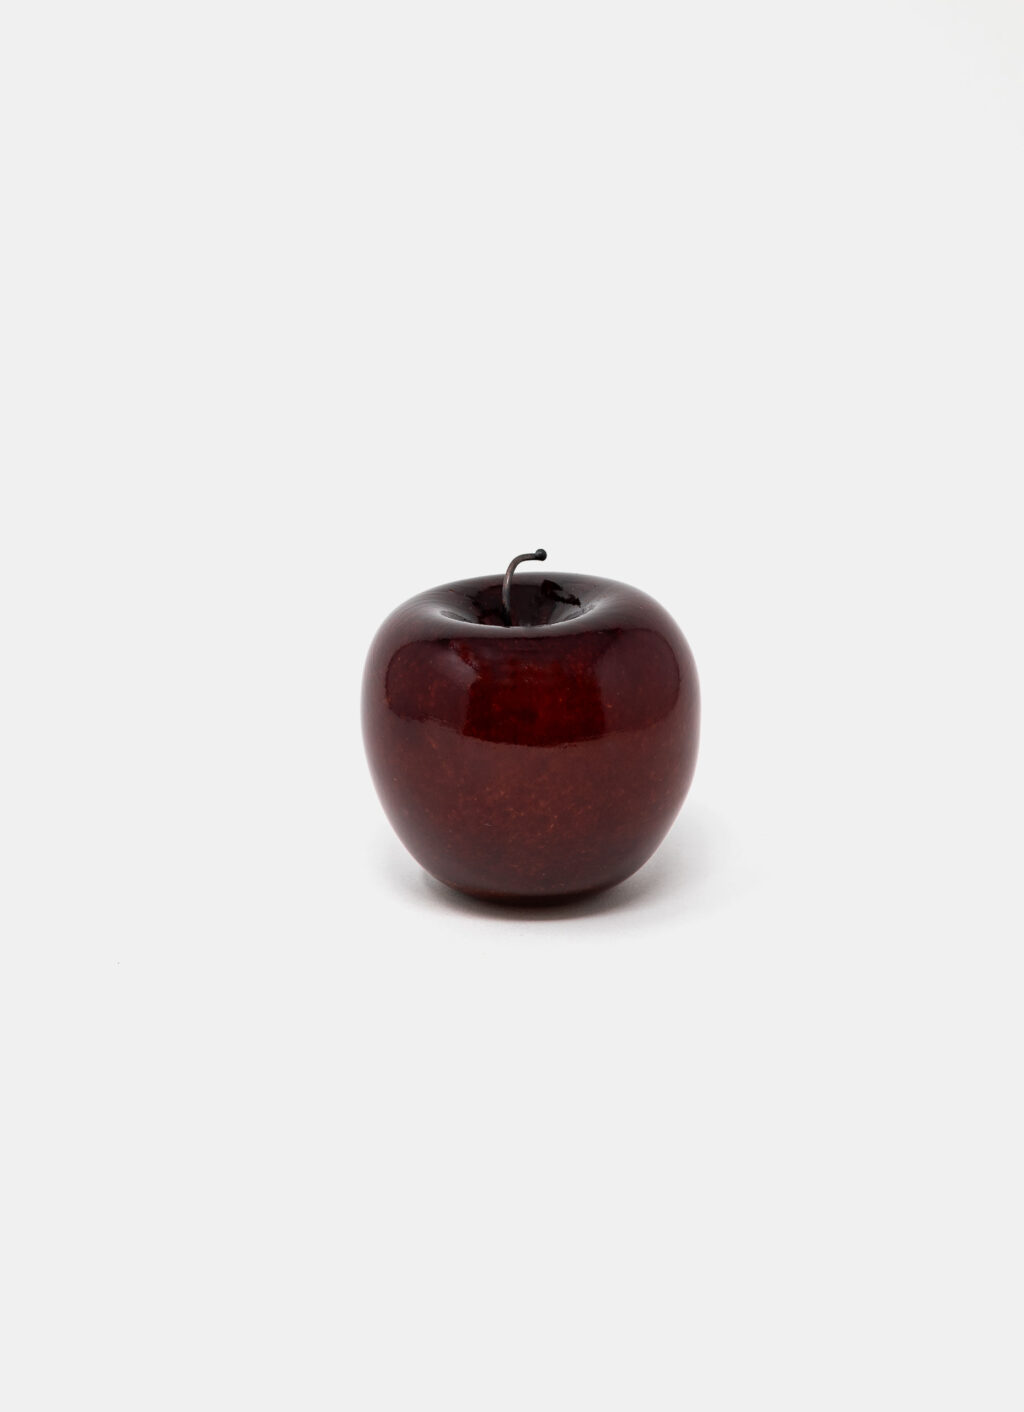 Gunilla Kihlgren - Handblown glass - Apple - red